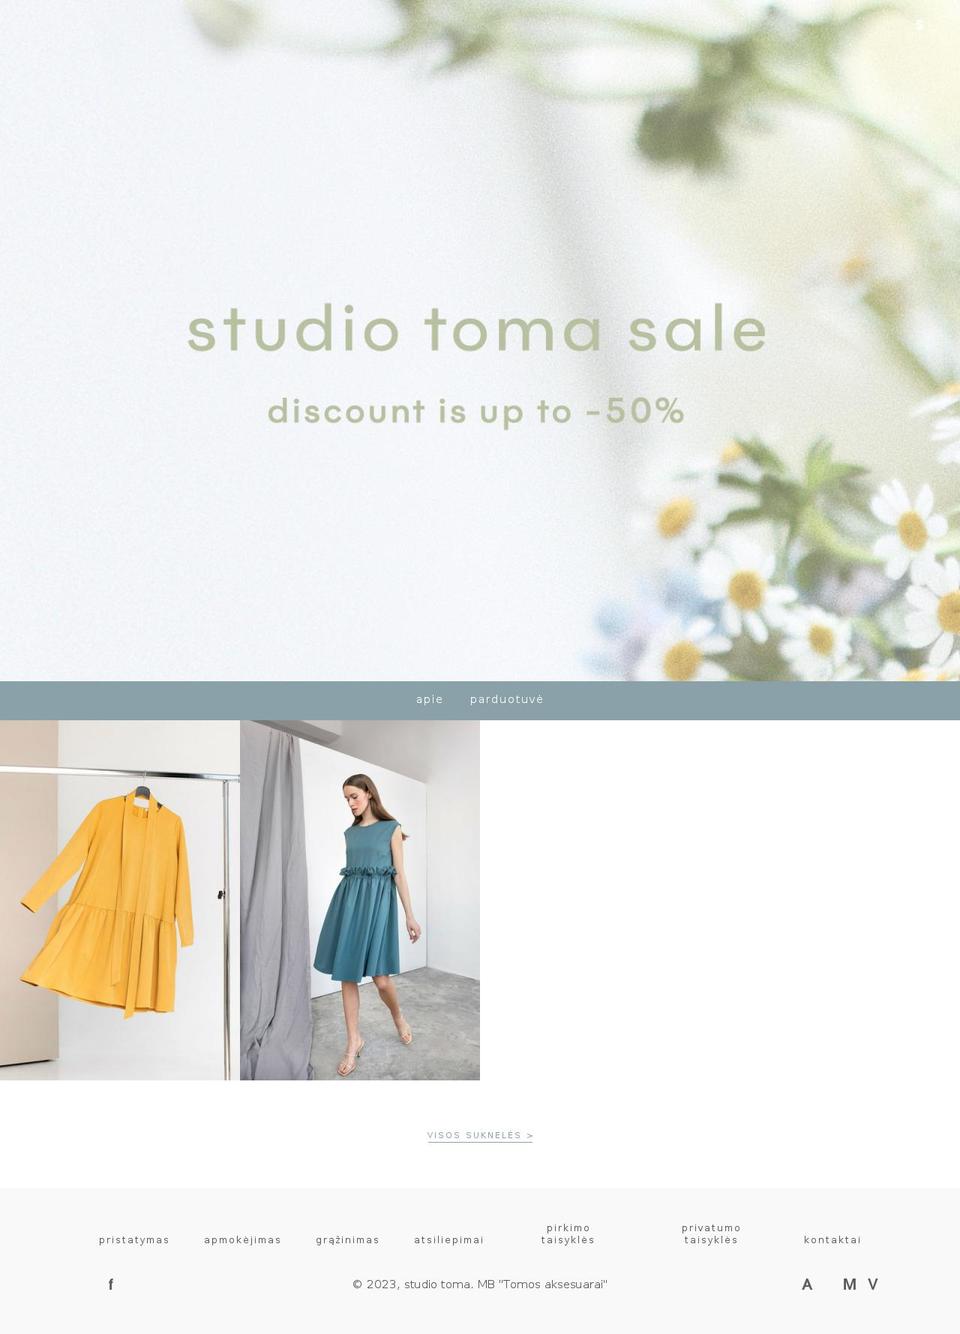 studiotoma.lt shopify website screenshot